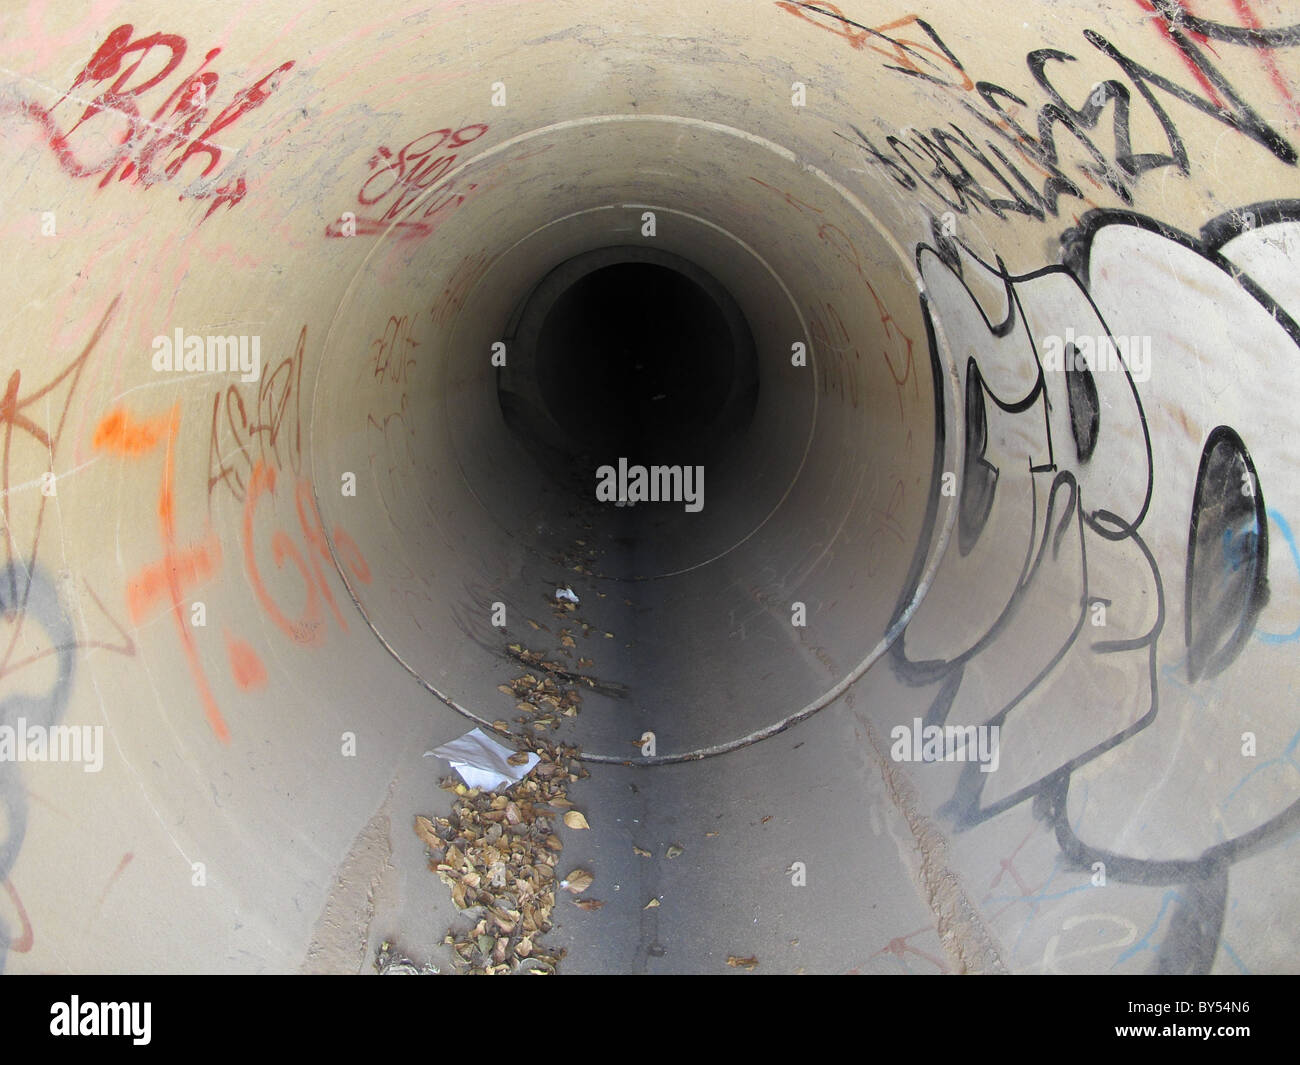 Sewer tunnel with graffiti Stock Photo